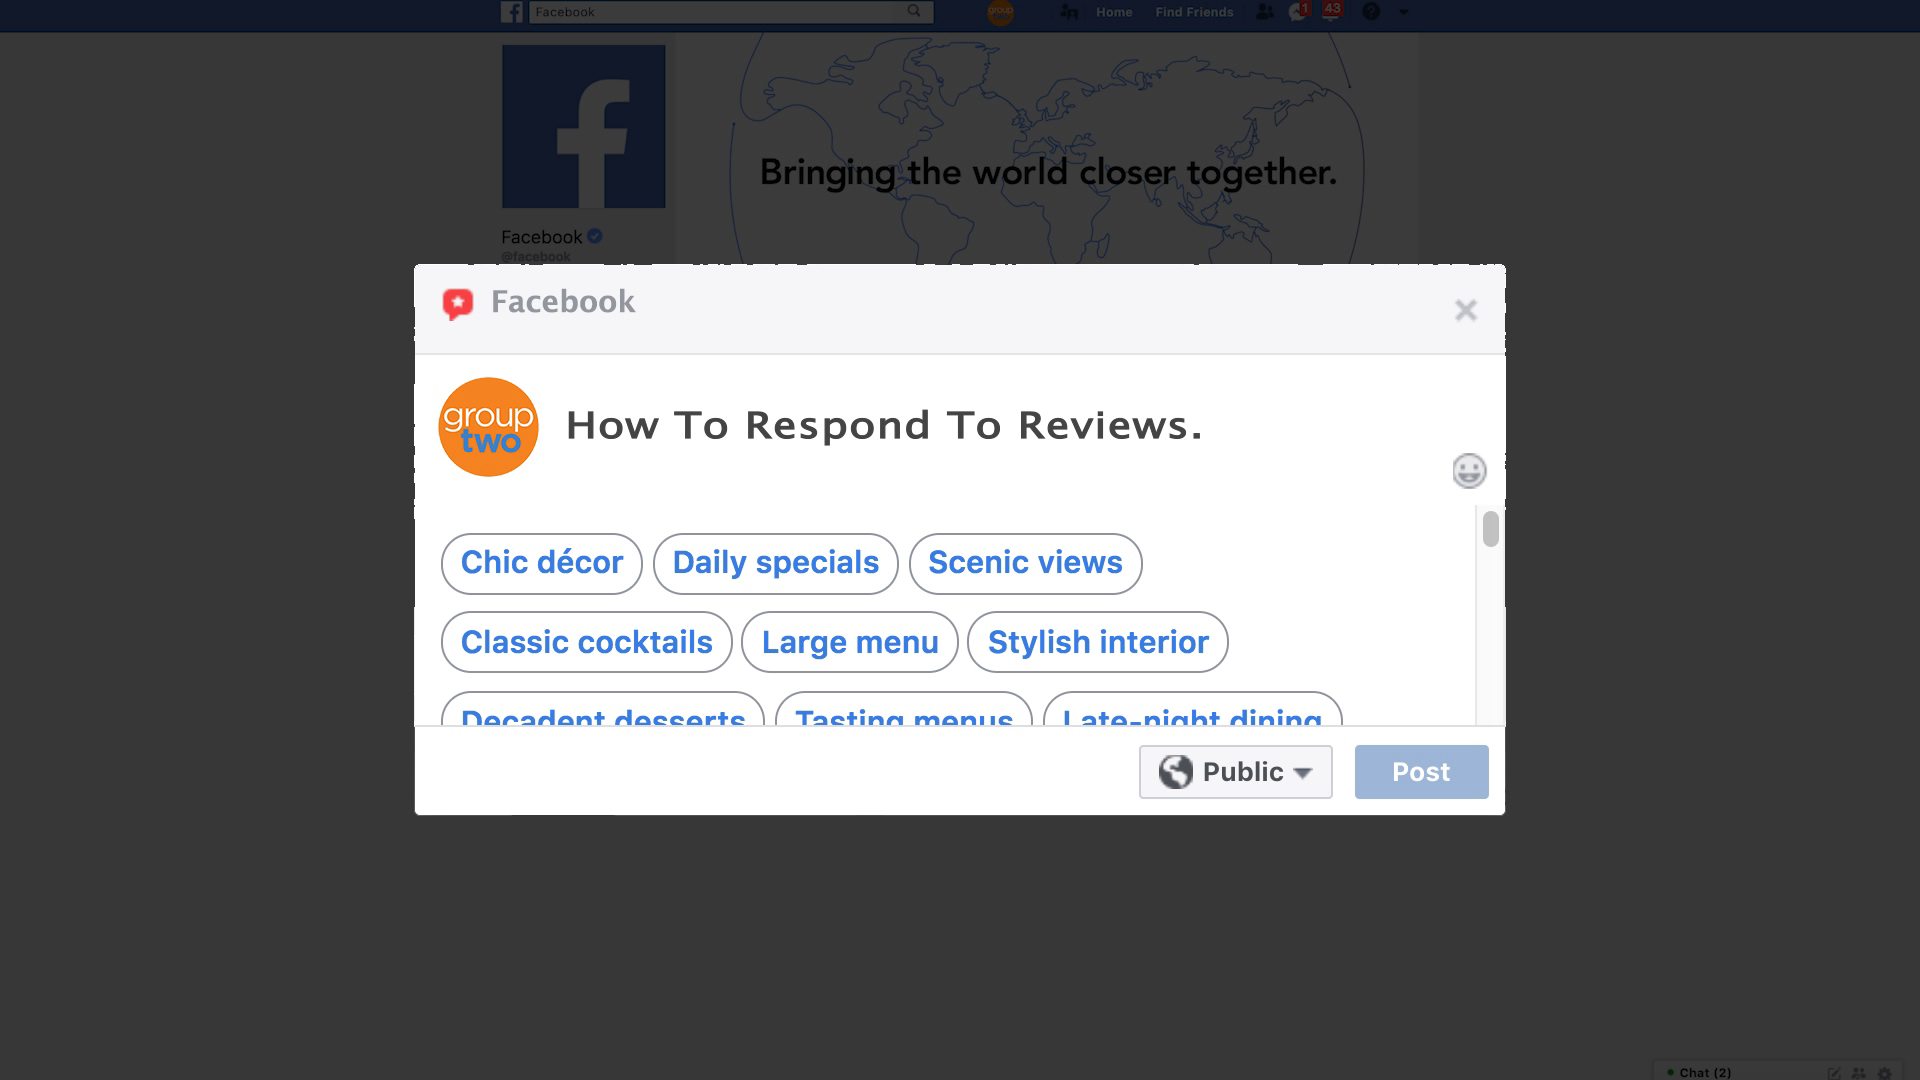 How To Respond To Reviews